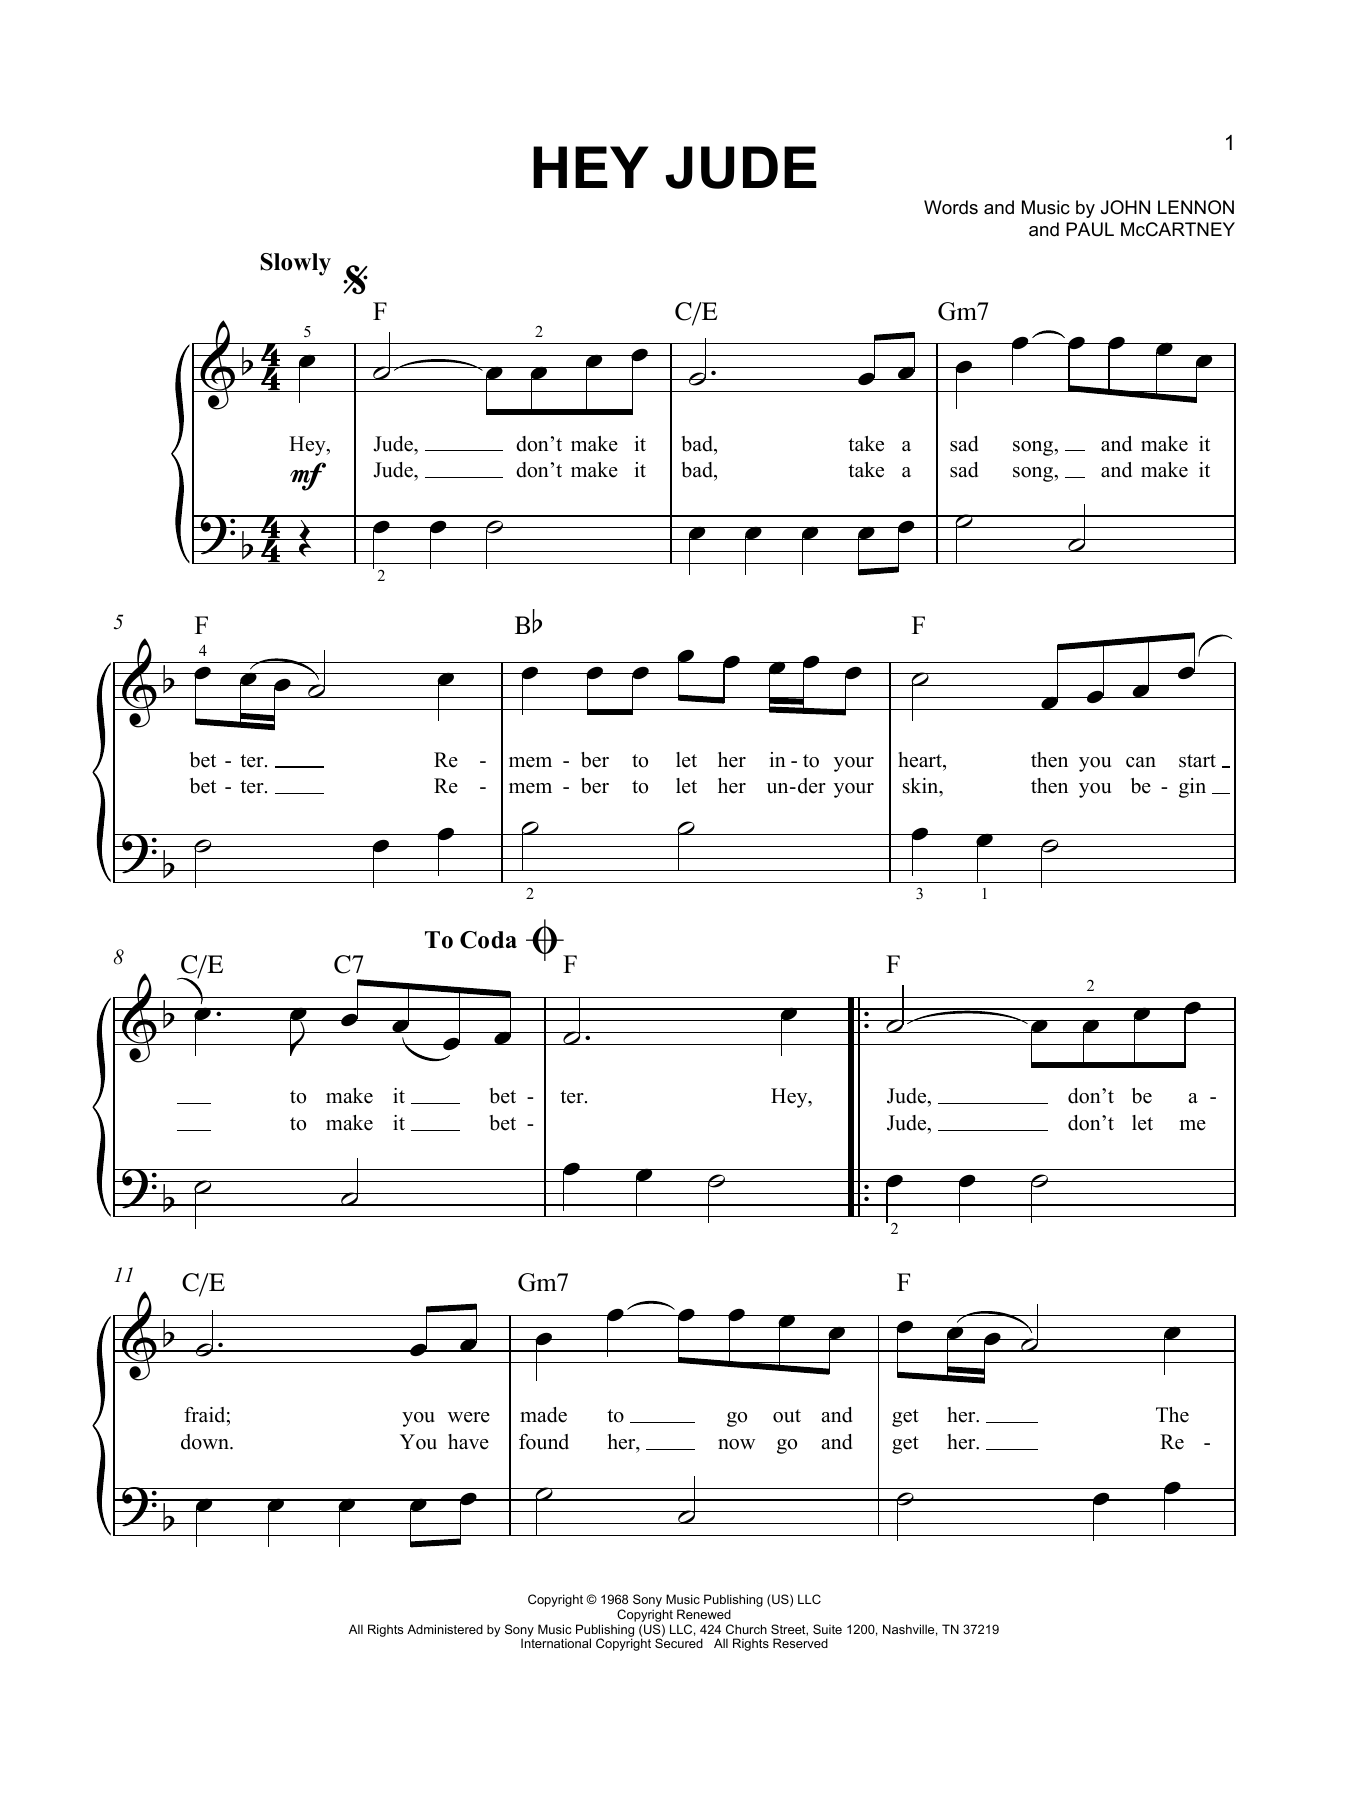 Hey jude easy piano sheet music pdf